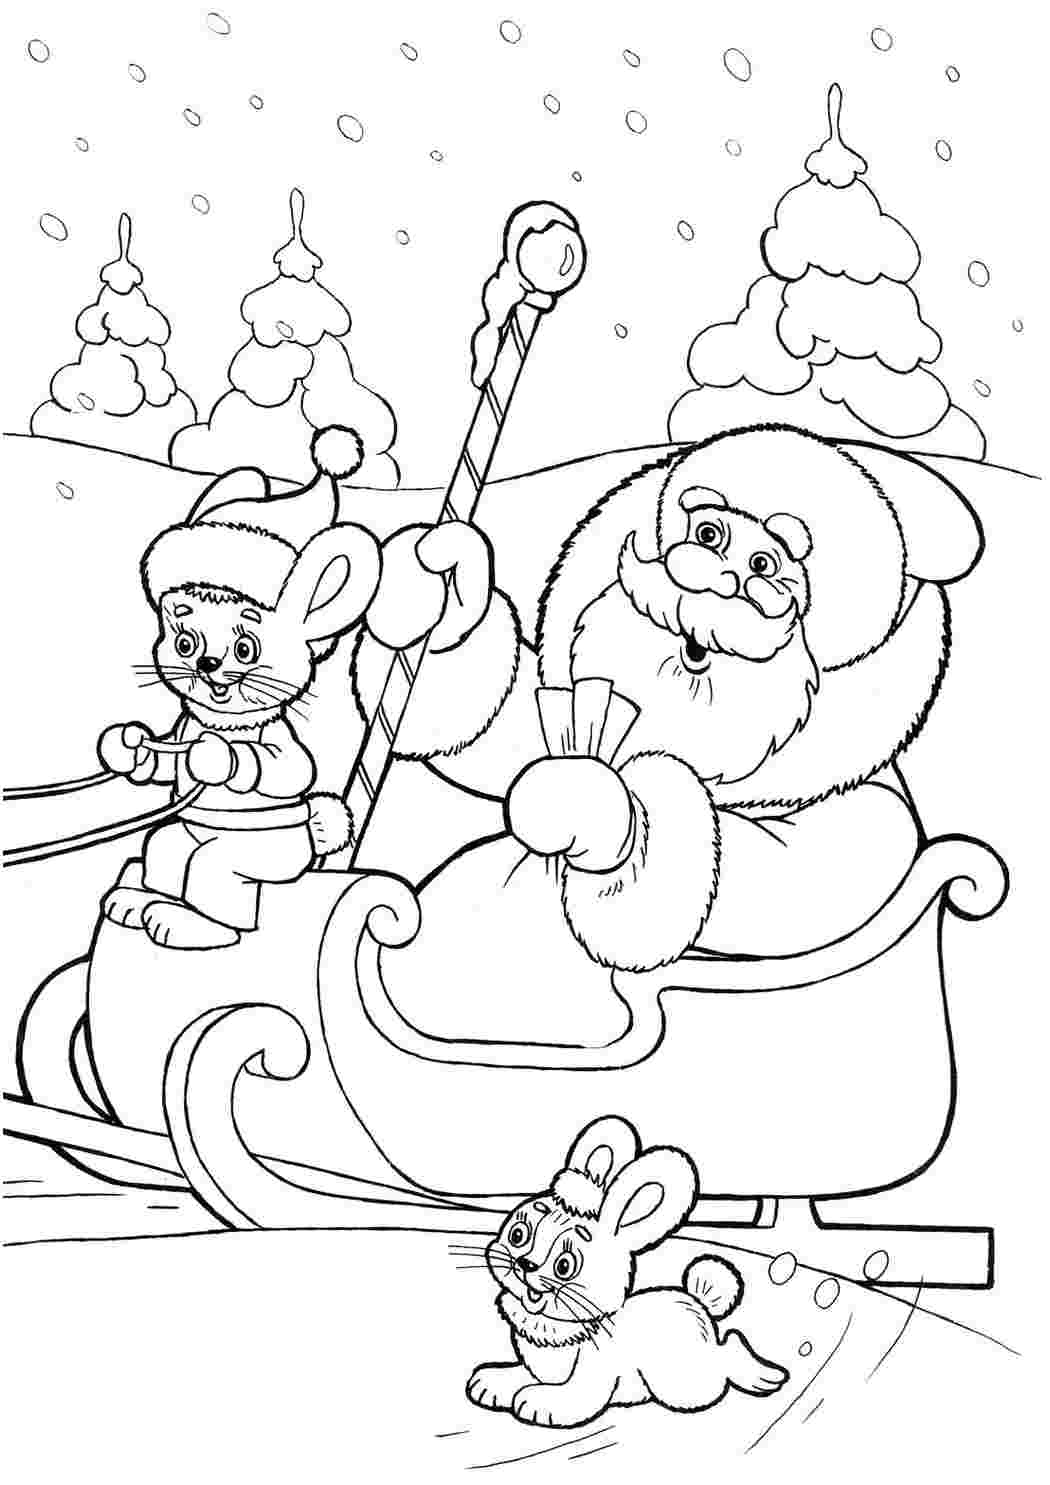 Раскраски про зиму для детей Дед мороз и снегурочка в санях